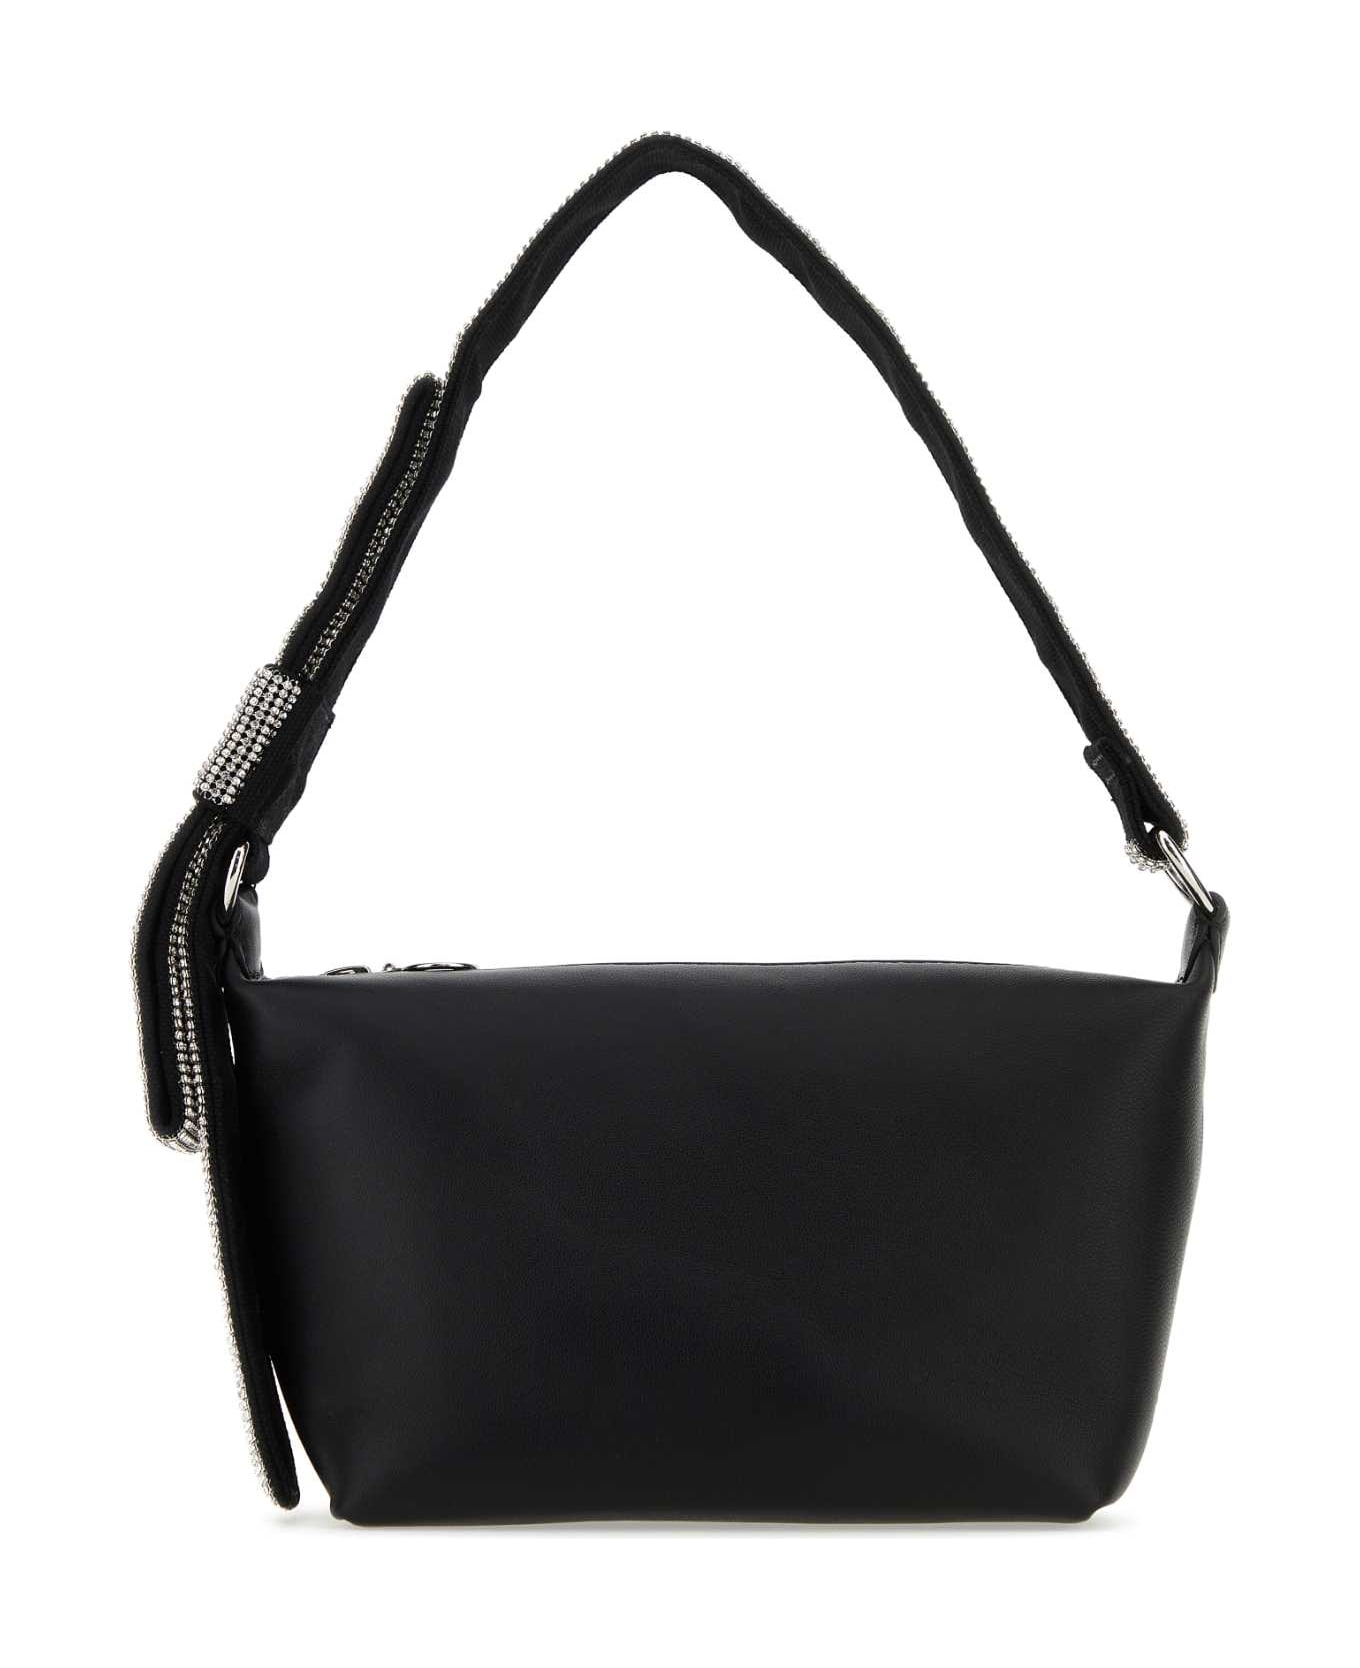 Kara Black Nappa Leather Shoulder Bag - BLACKWHITE